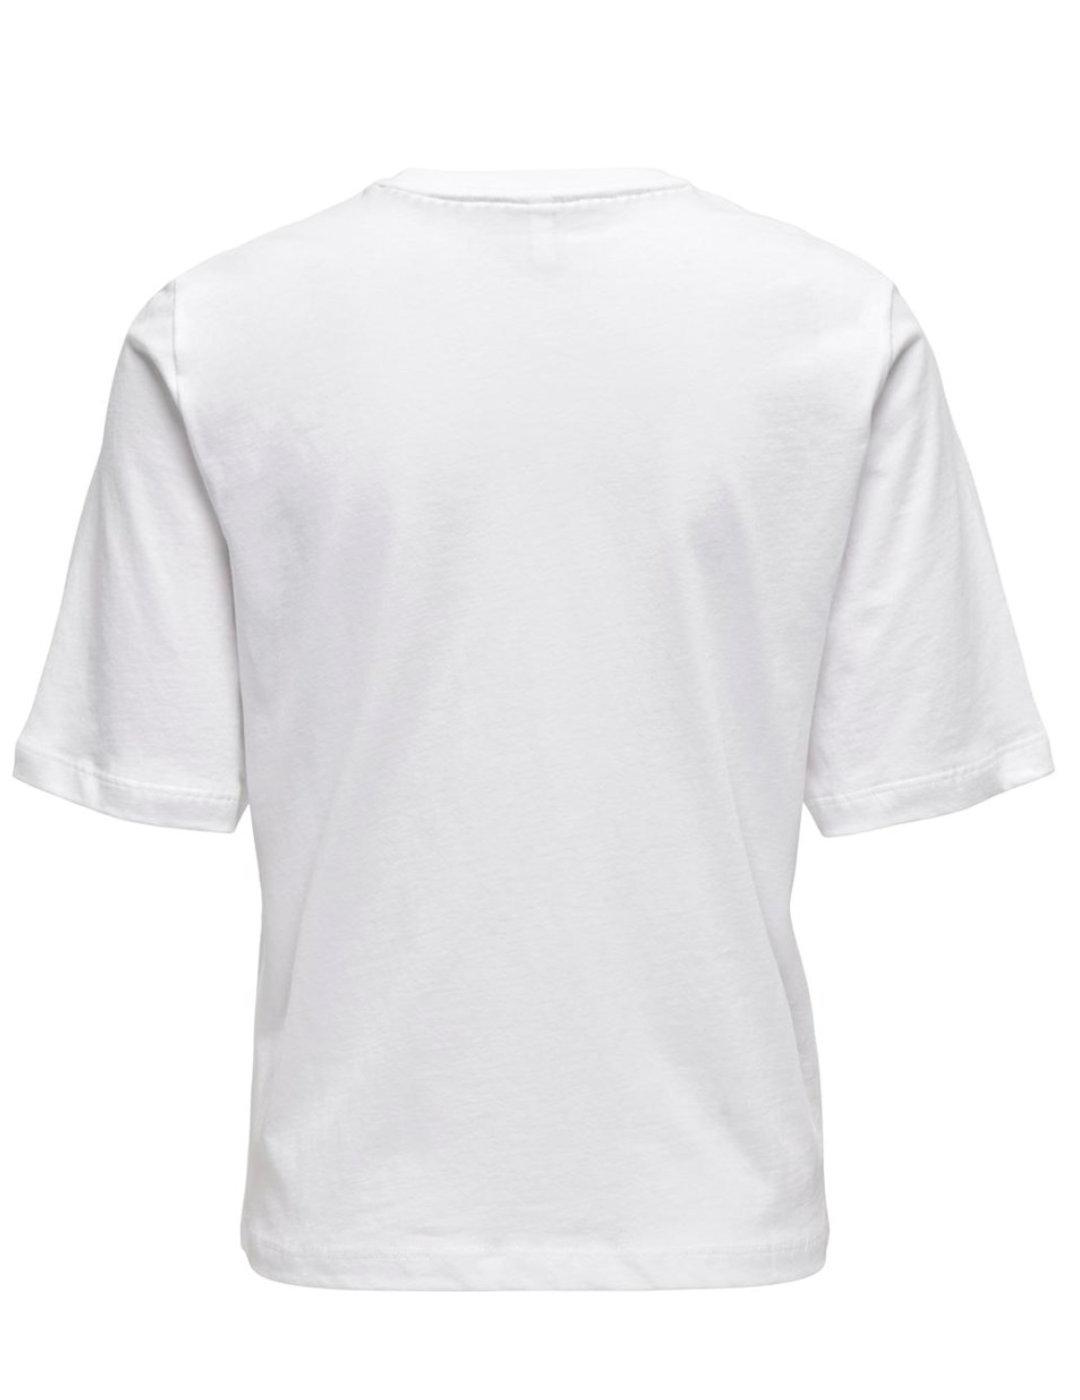 Camiseta Only Dorte blanca perritos manga corta de mujer